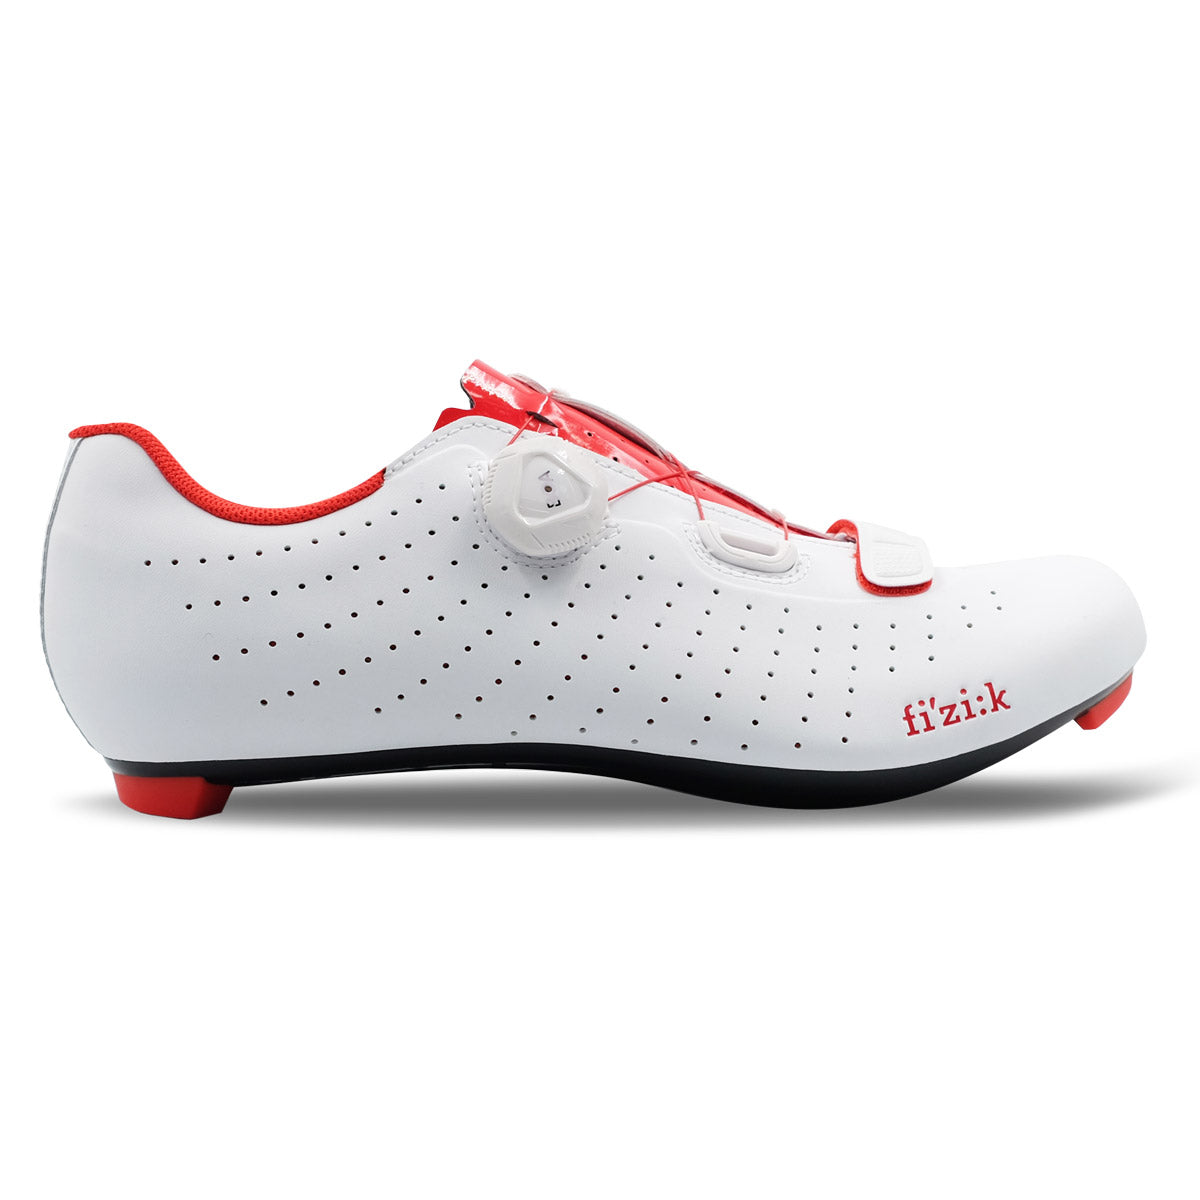 Fizik Tempo R5 Overcurve Shoes - White red